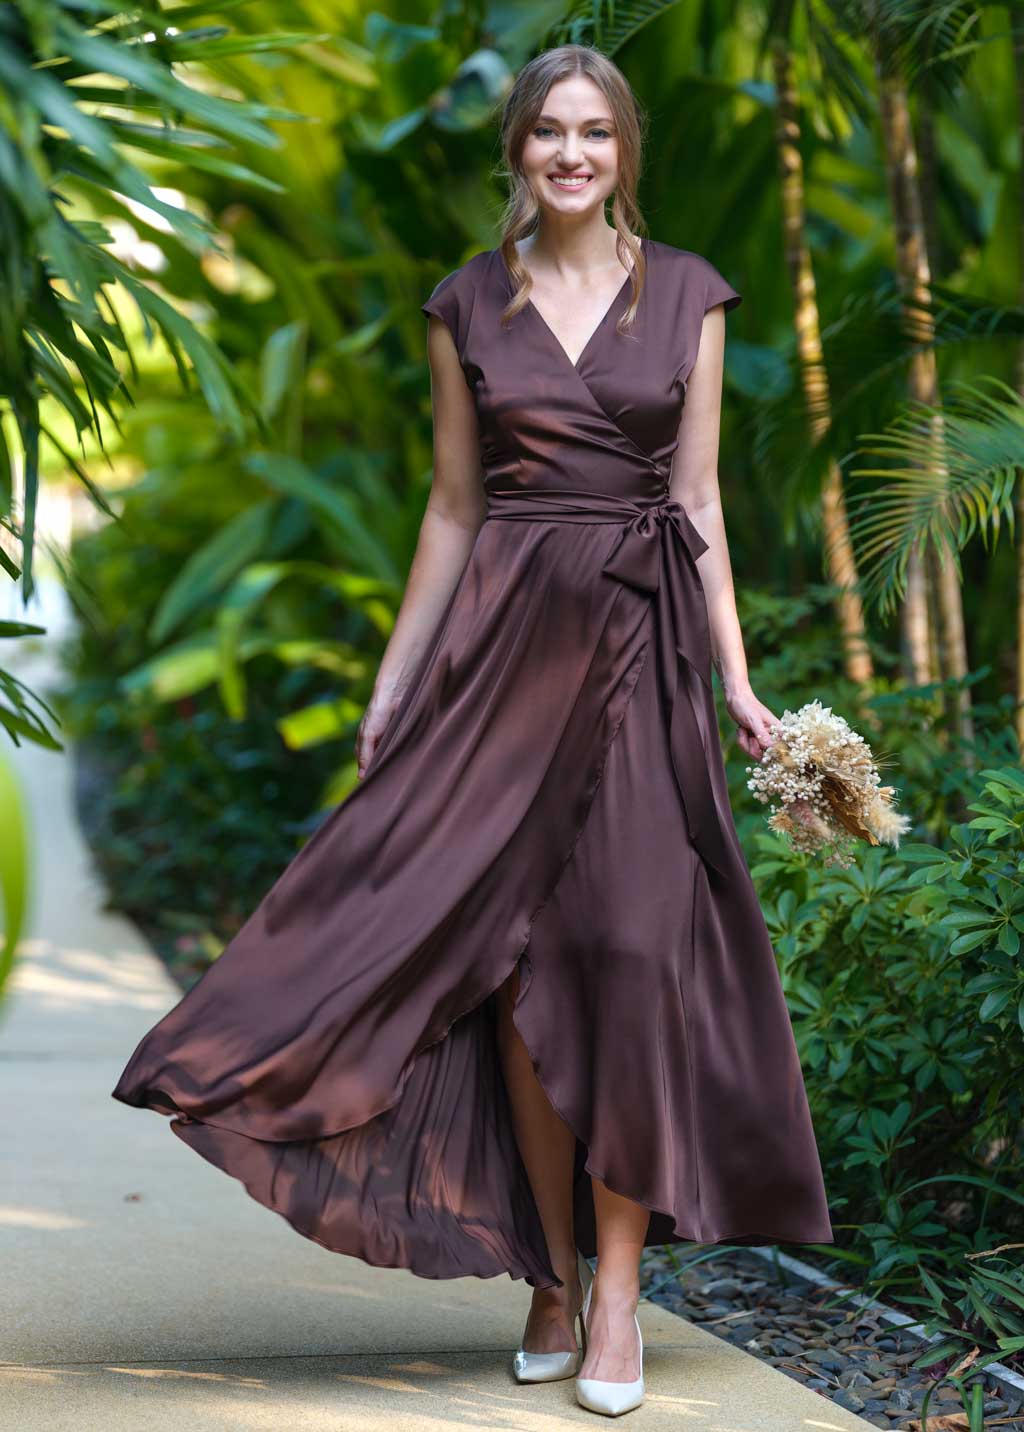 Chocolate brown romantic wrap dress